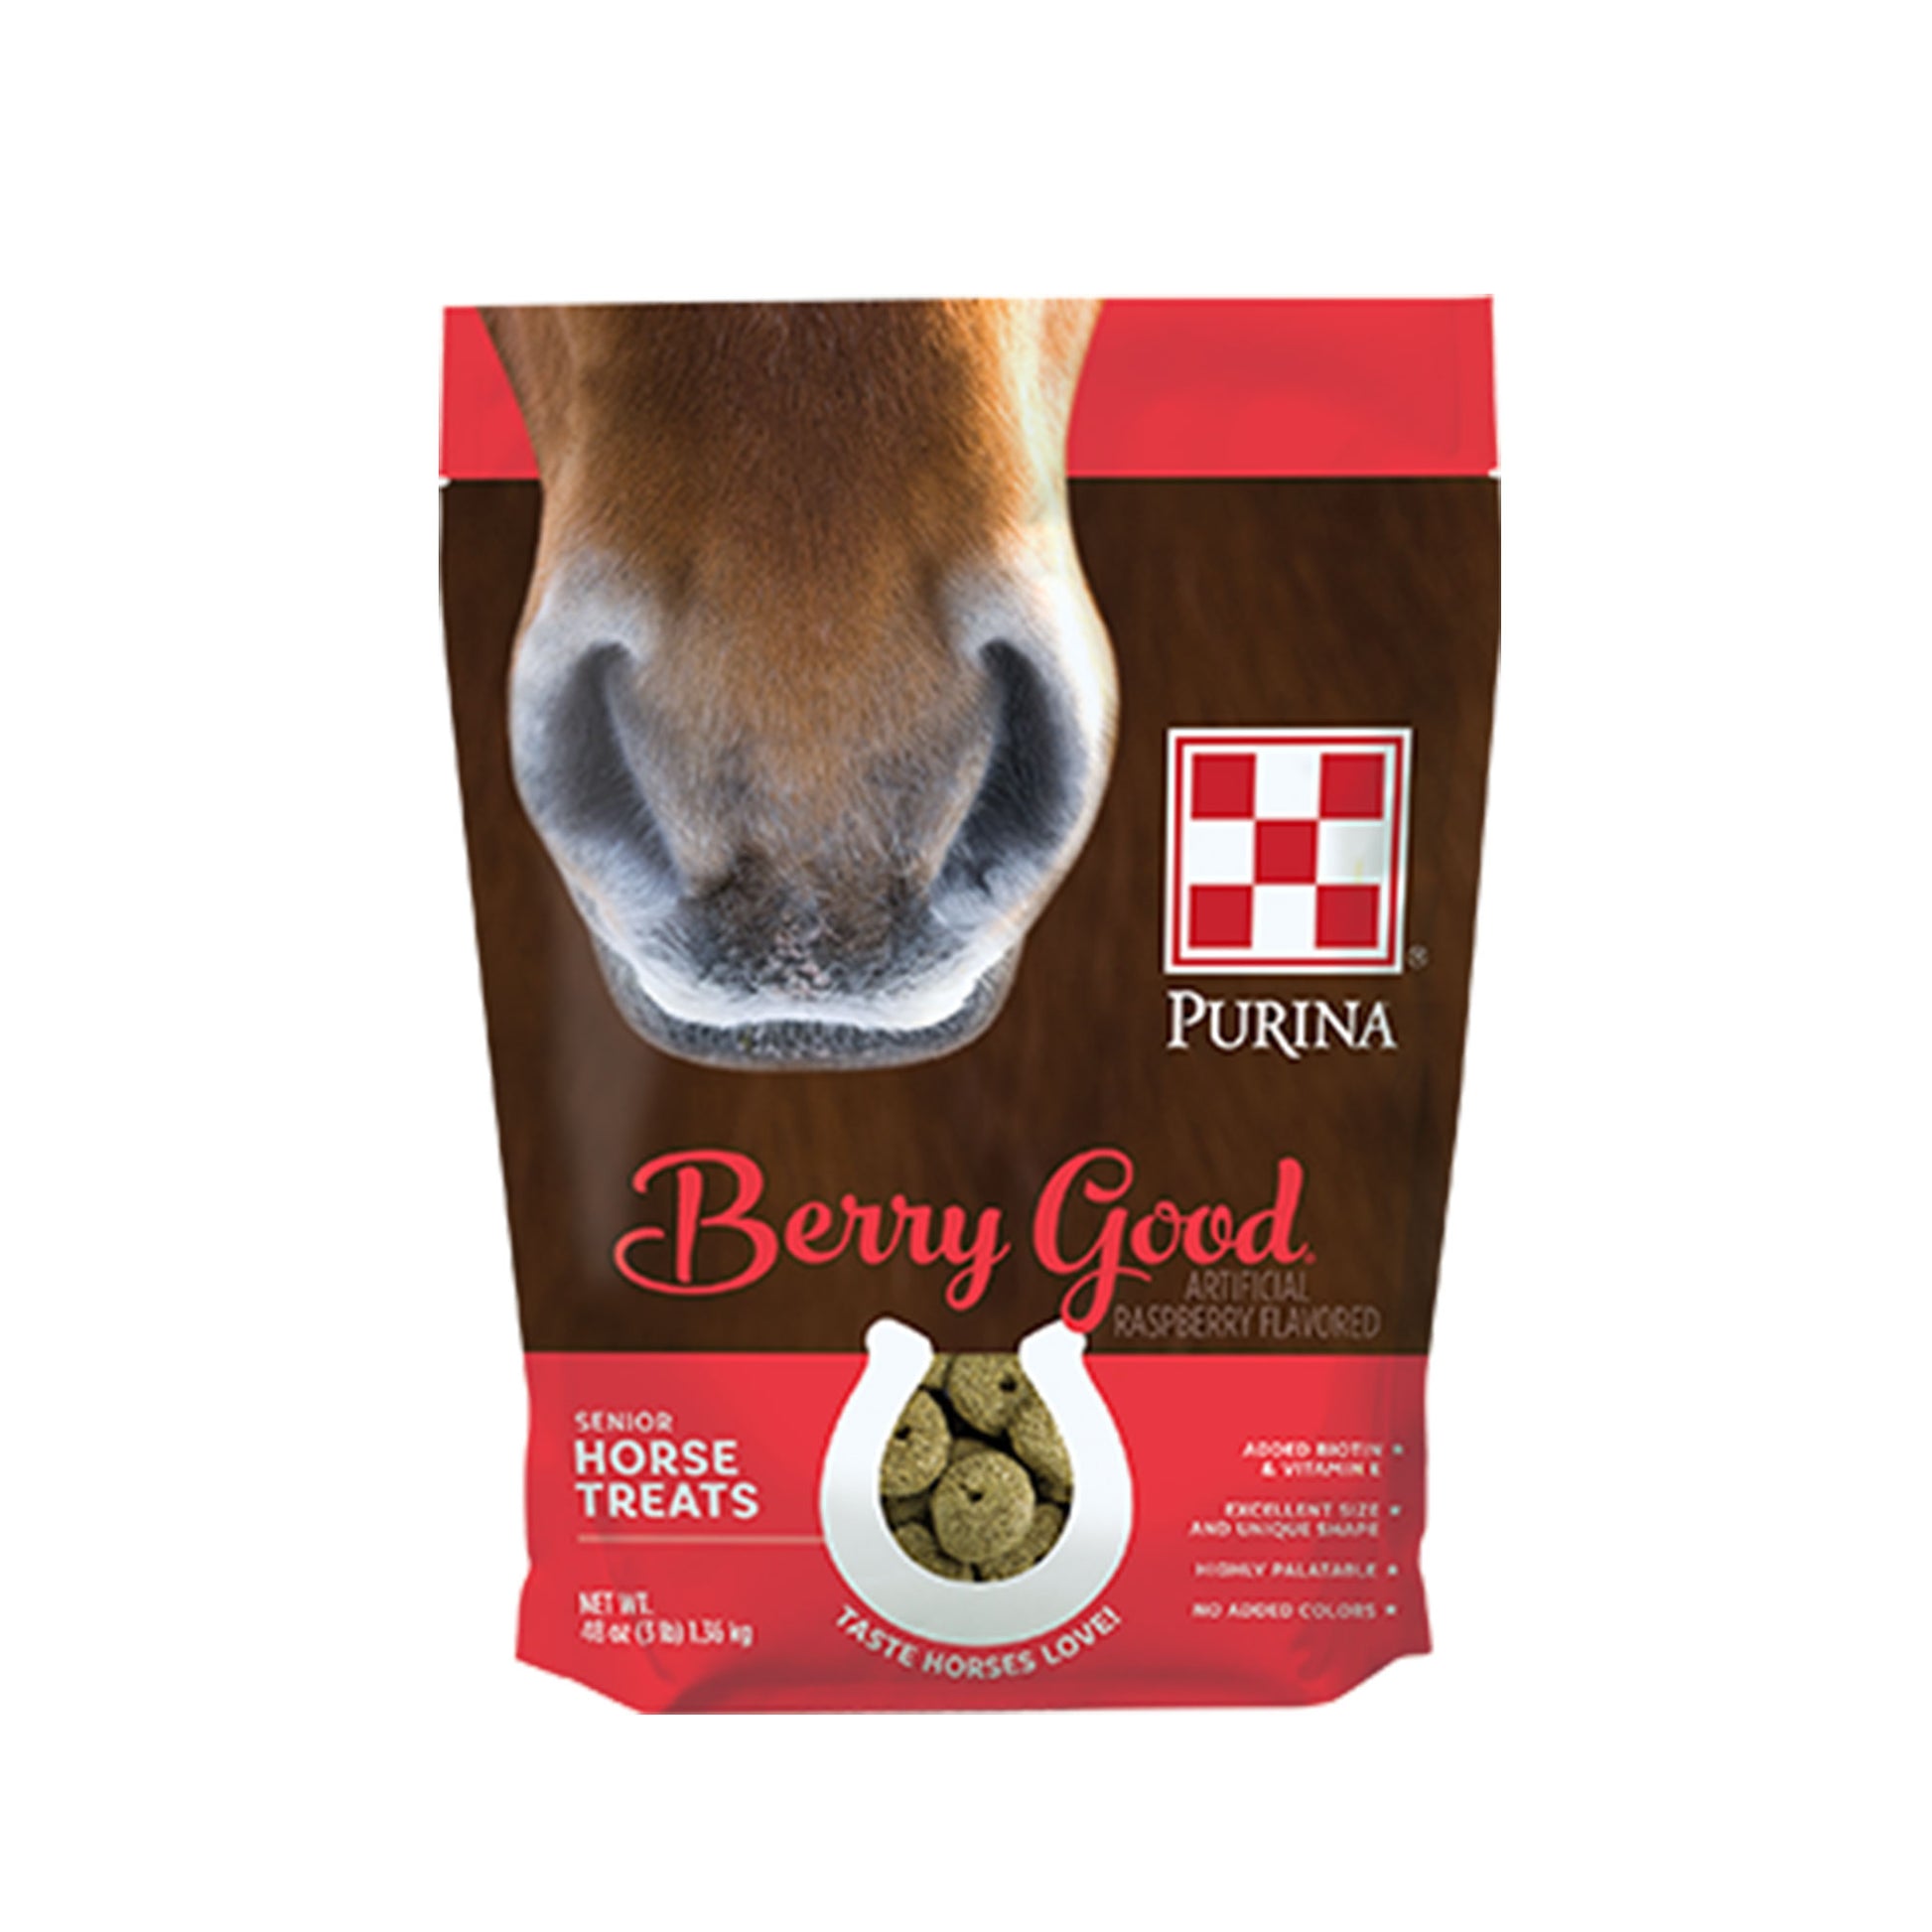 Purina Berry Good Horse treat 3 Pound Bag